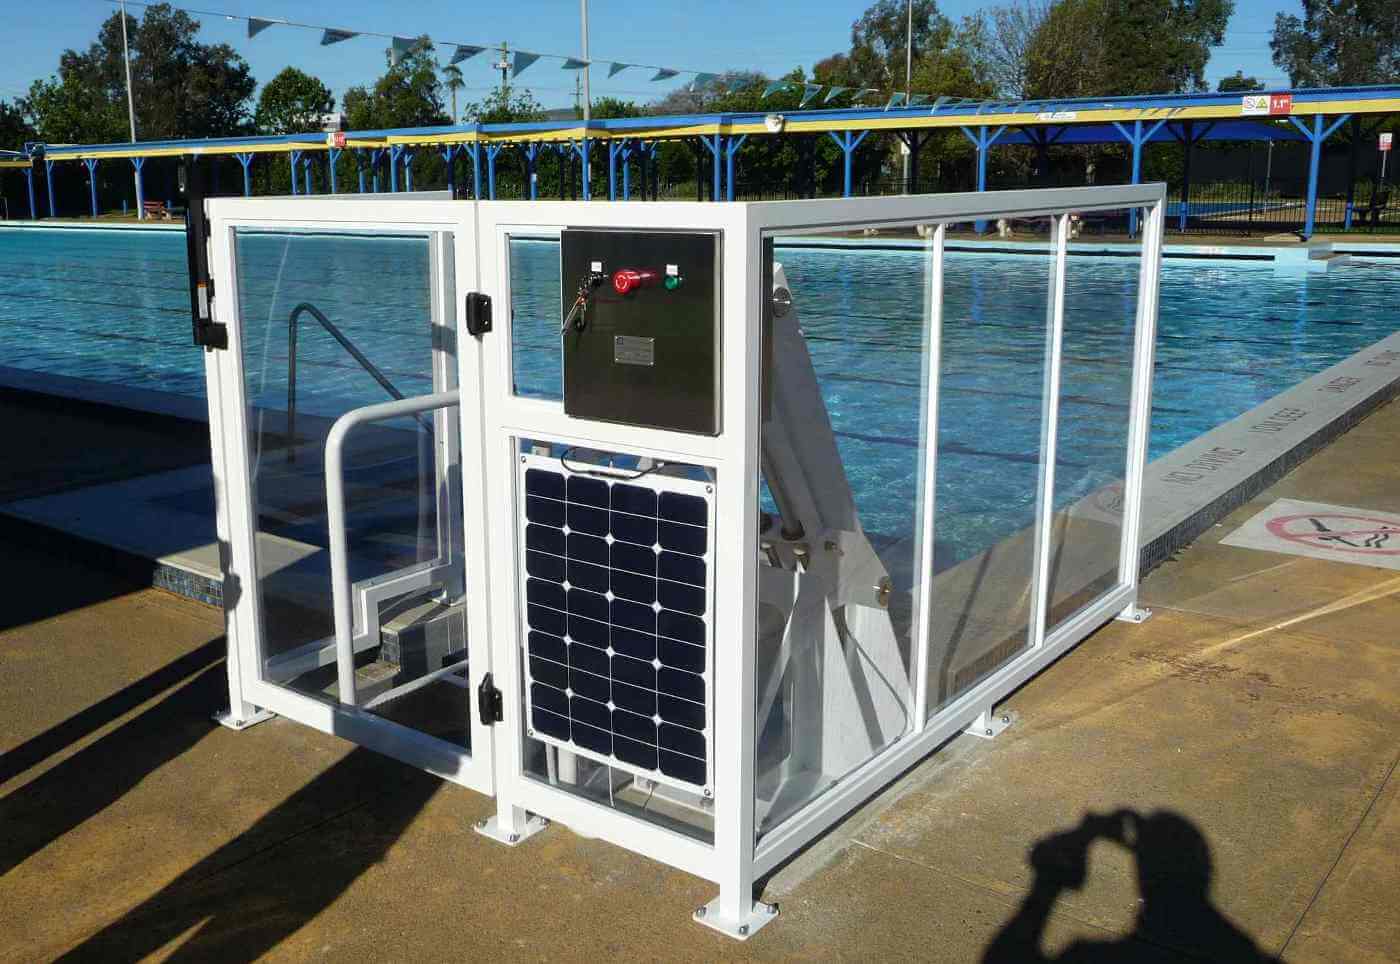 Dapto pool Unanderra has a solar powered lift for easy access